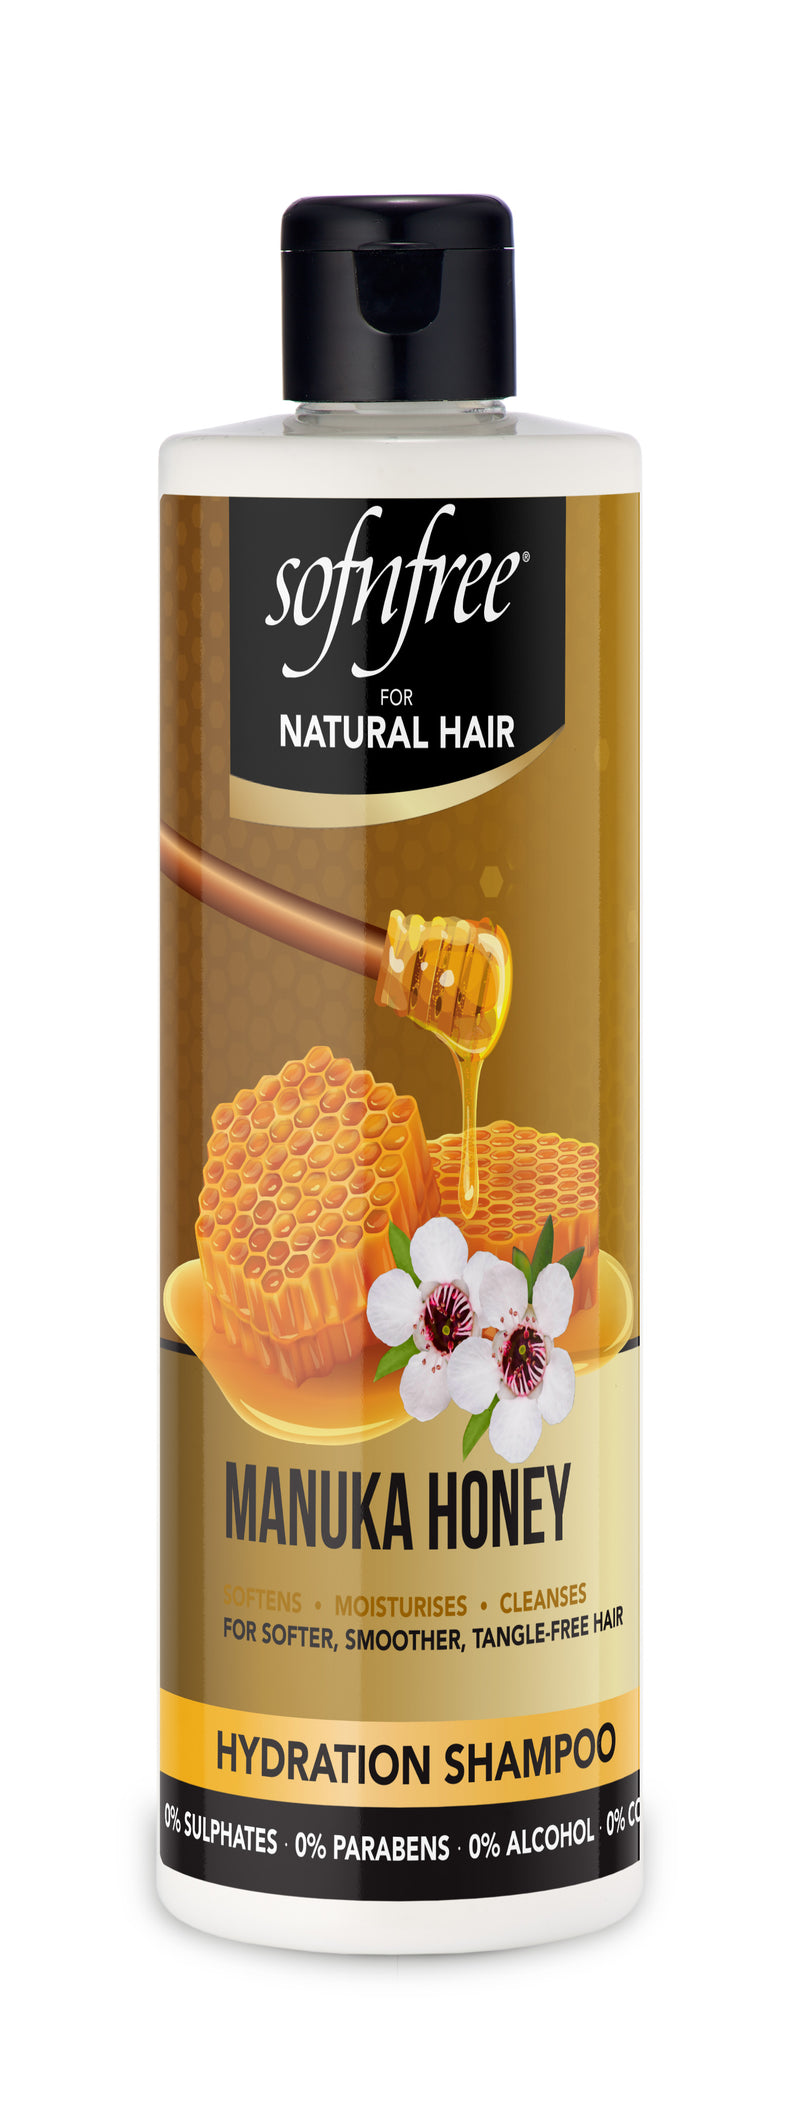 Sofnfree Hydration Shampoo with Manuka Honey